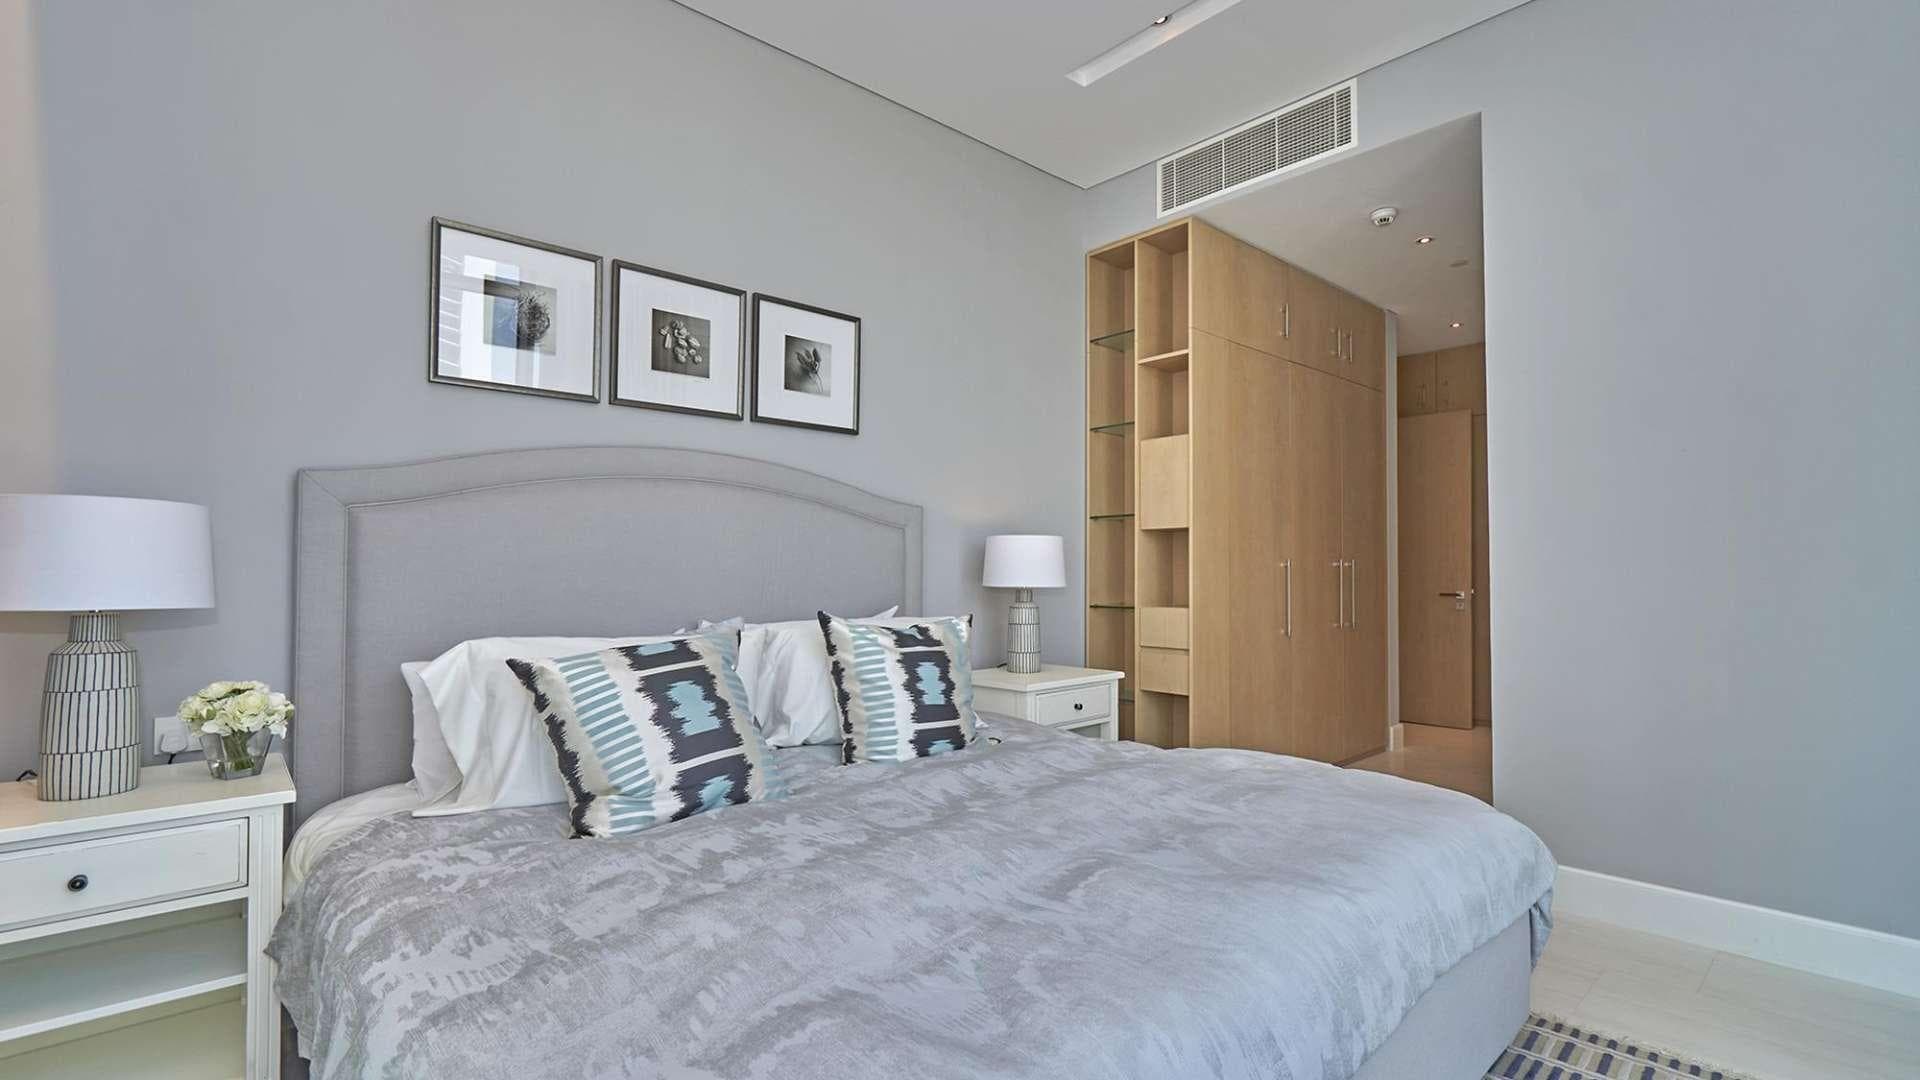 2 Bedroom Apartment For Rent Sls Dubai Hotel Residences Lp20720 2a50185a53a80a00.jpg